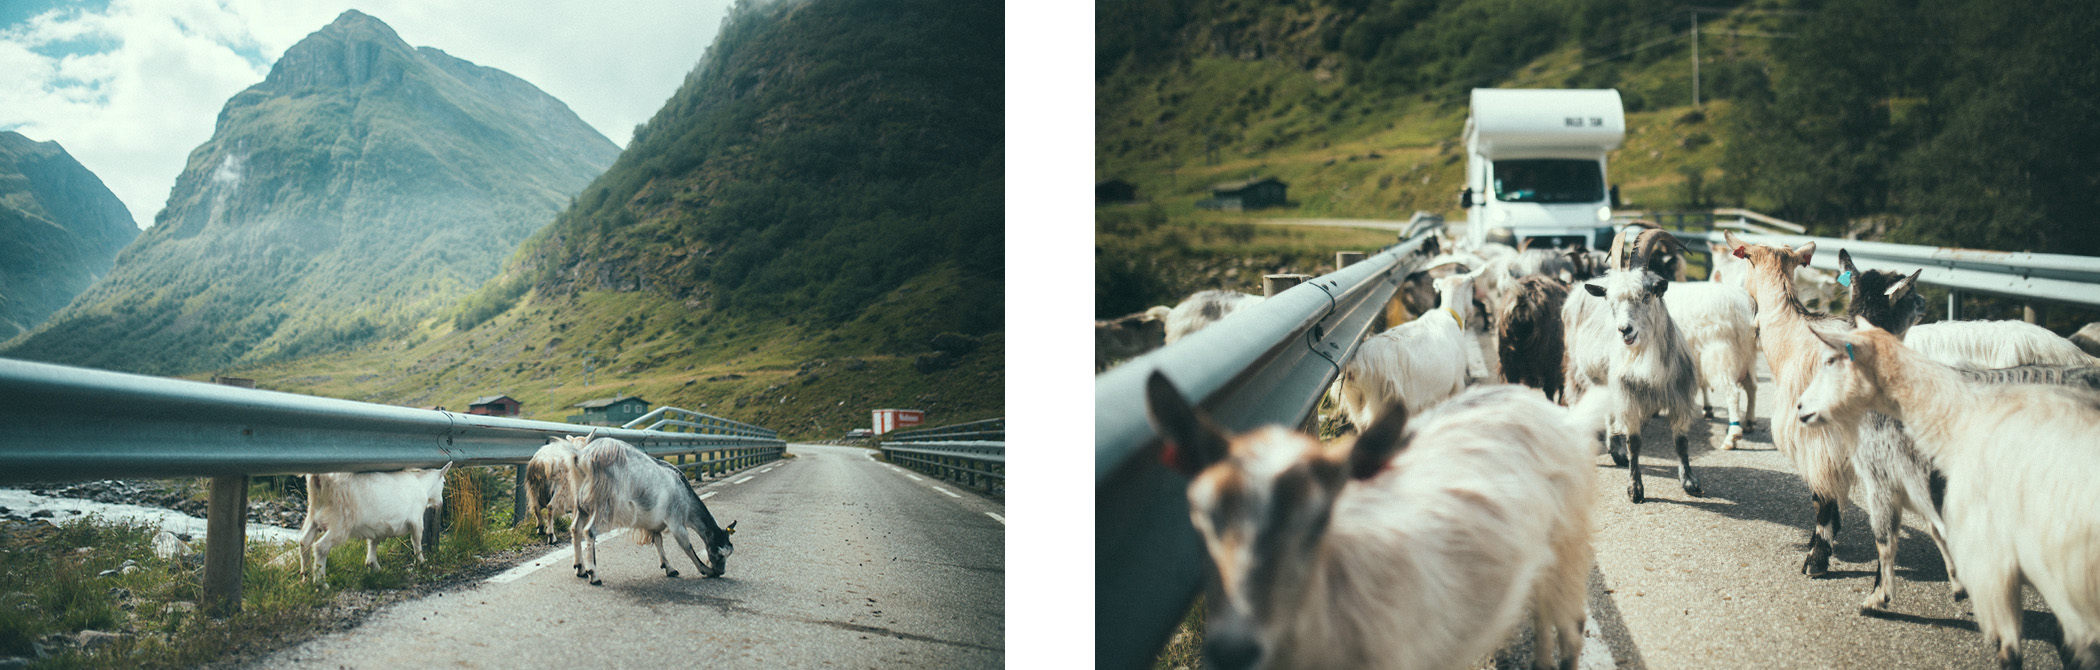 kozy w Undredal, Norwegia